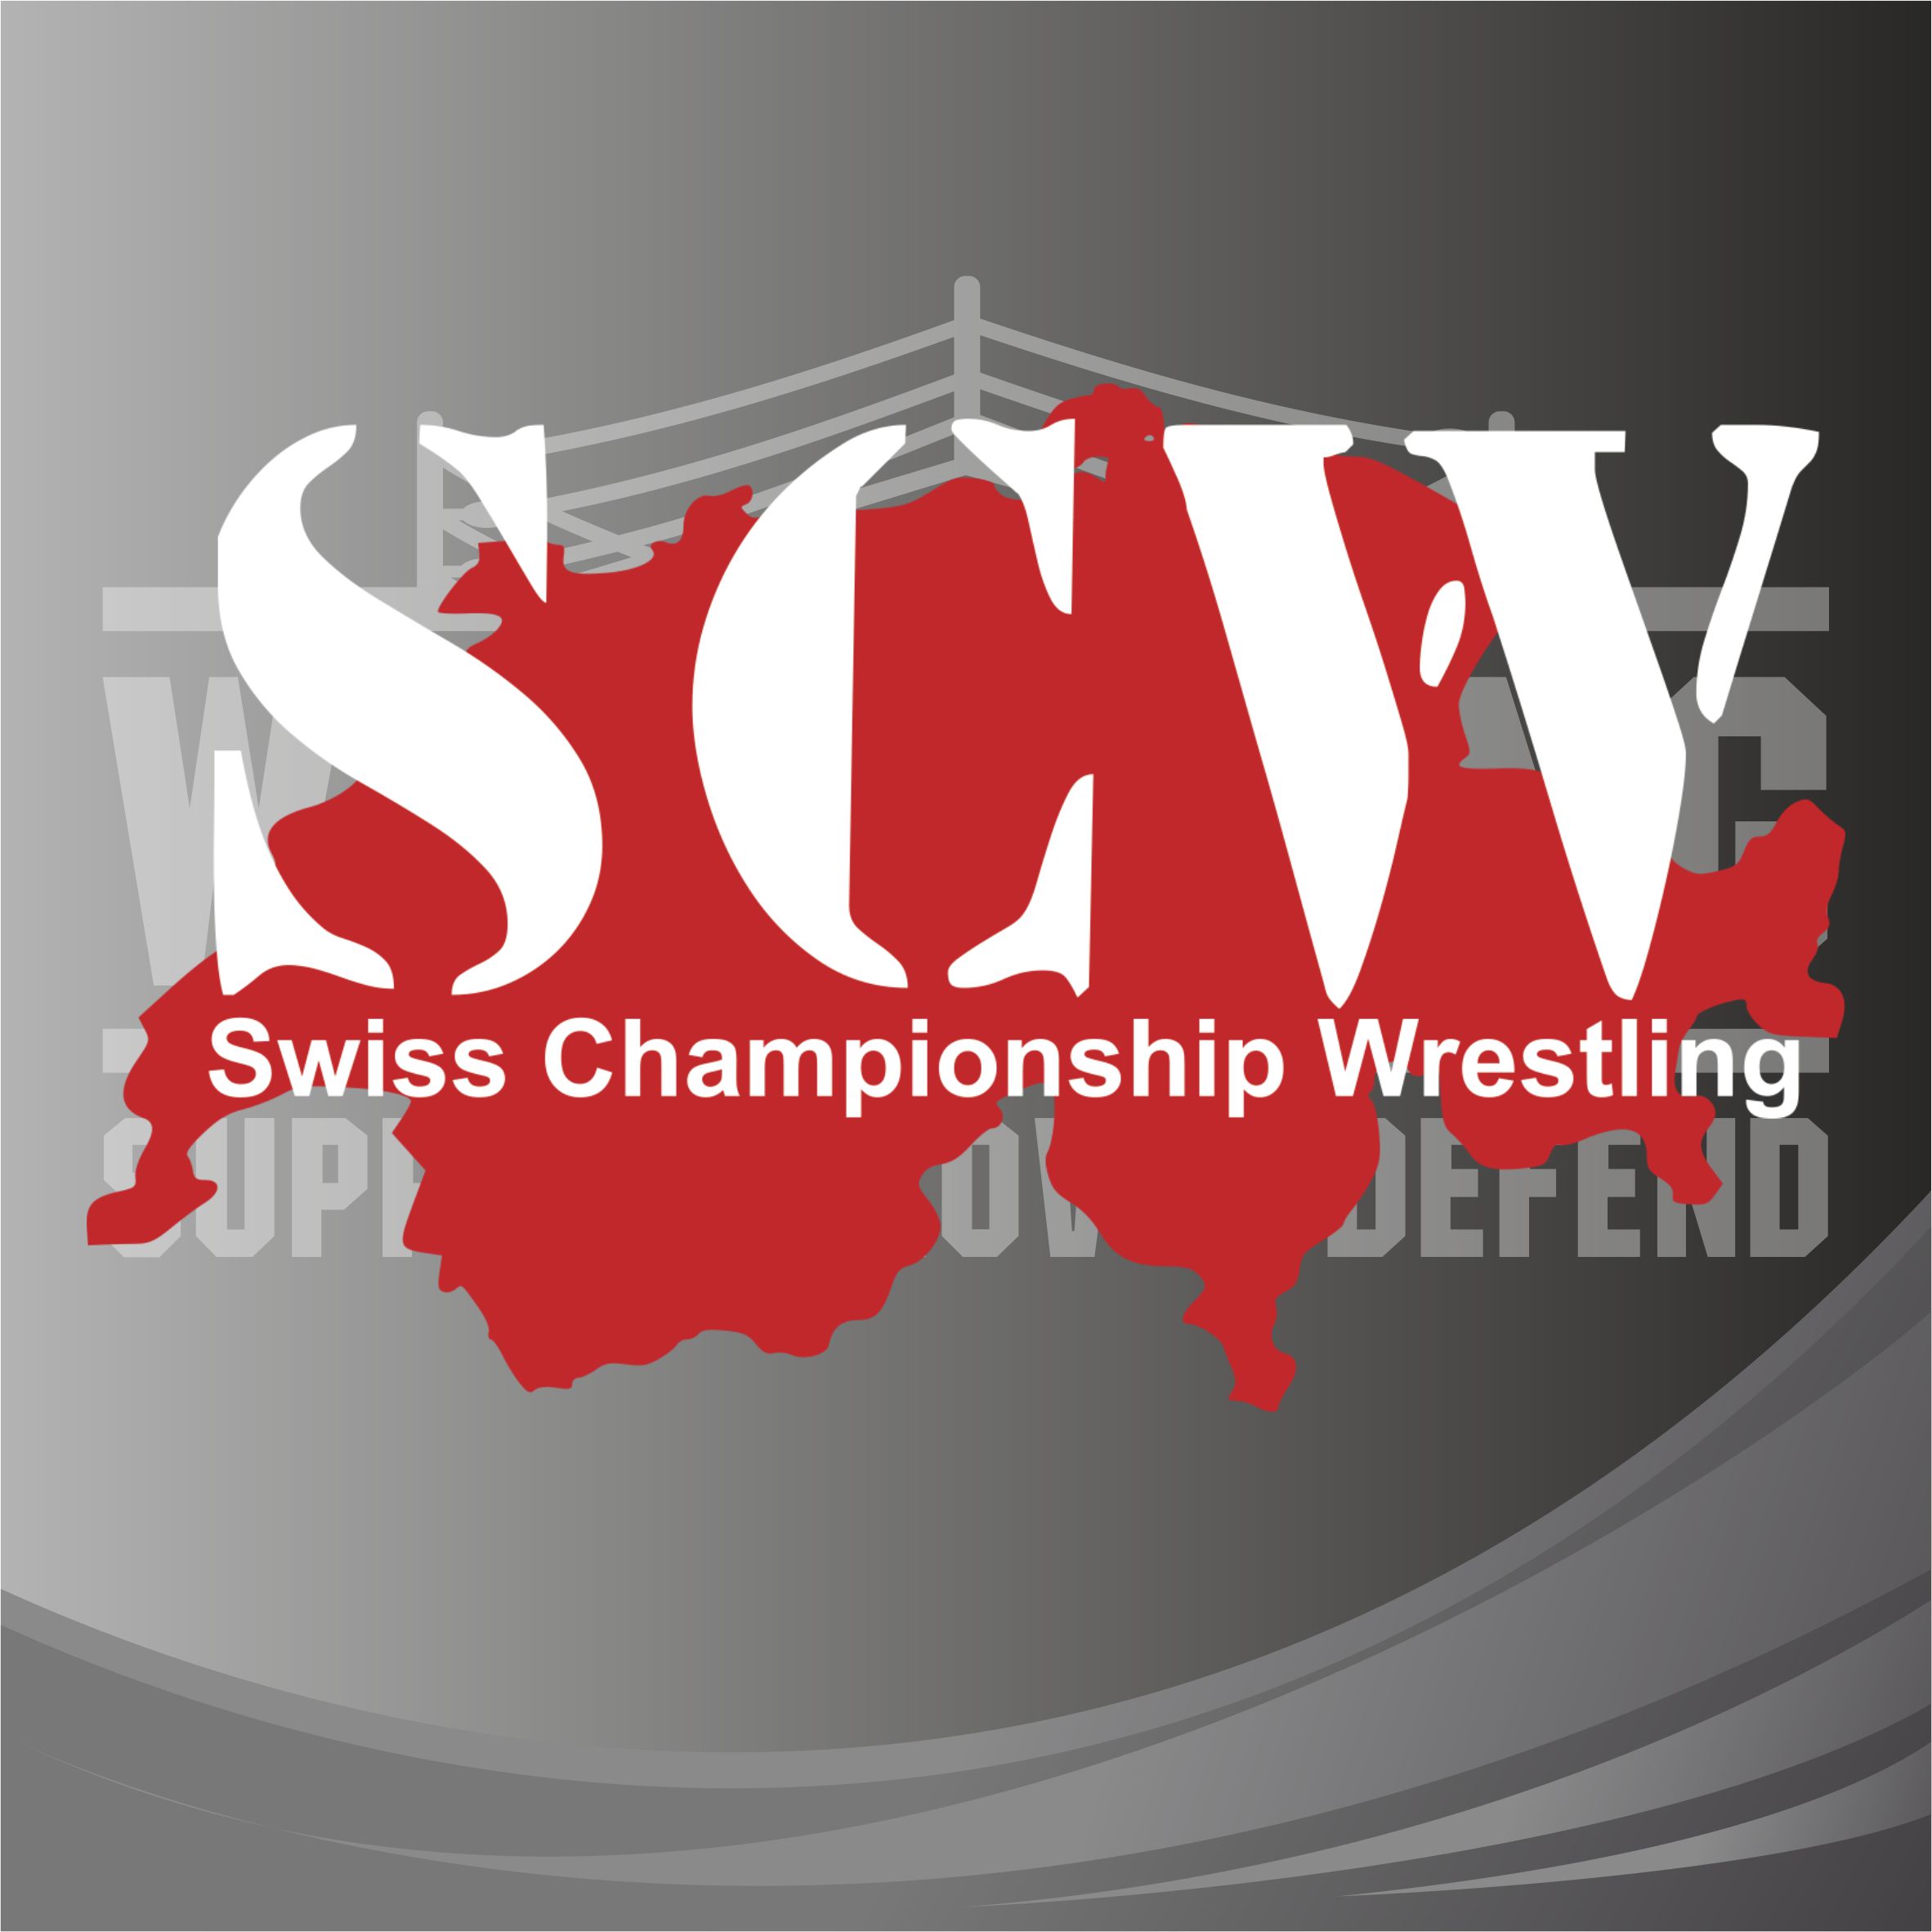 Swiss Championship Wrestling